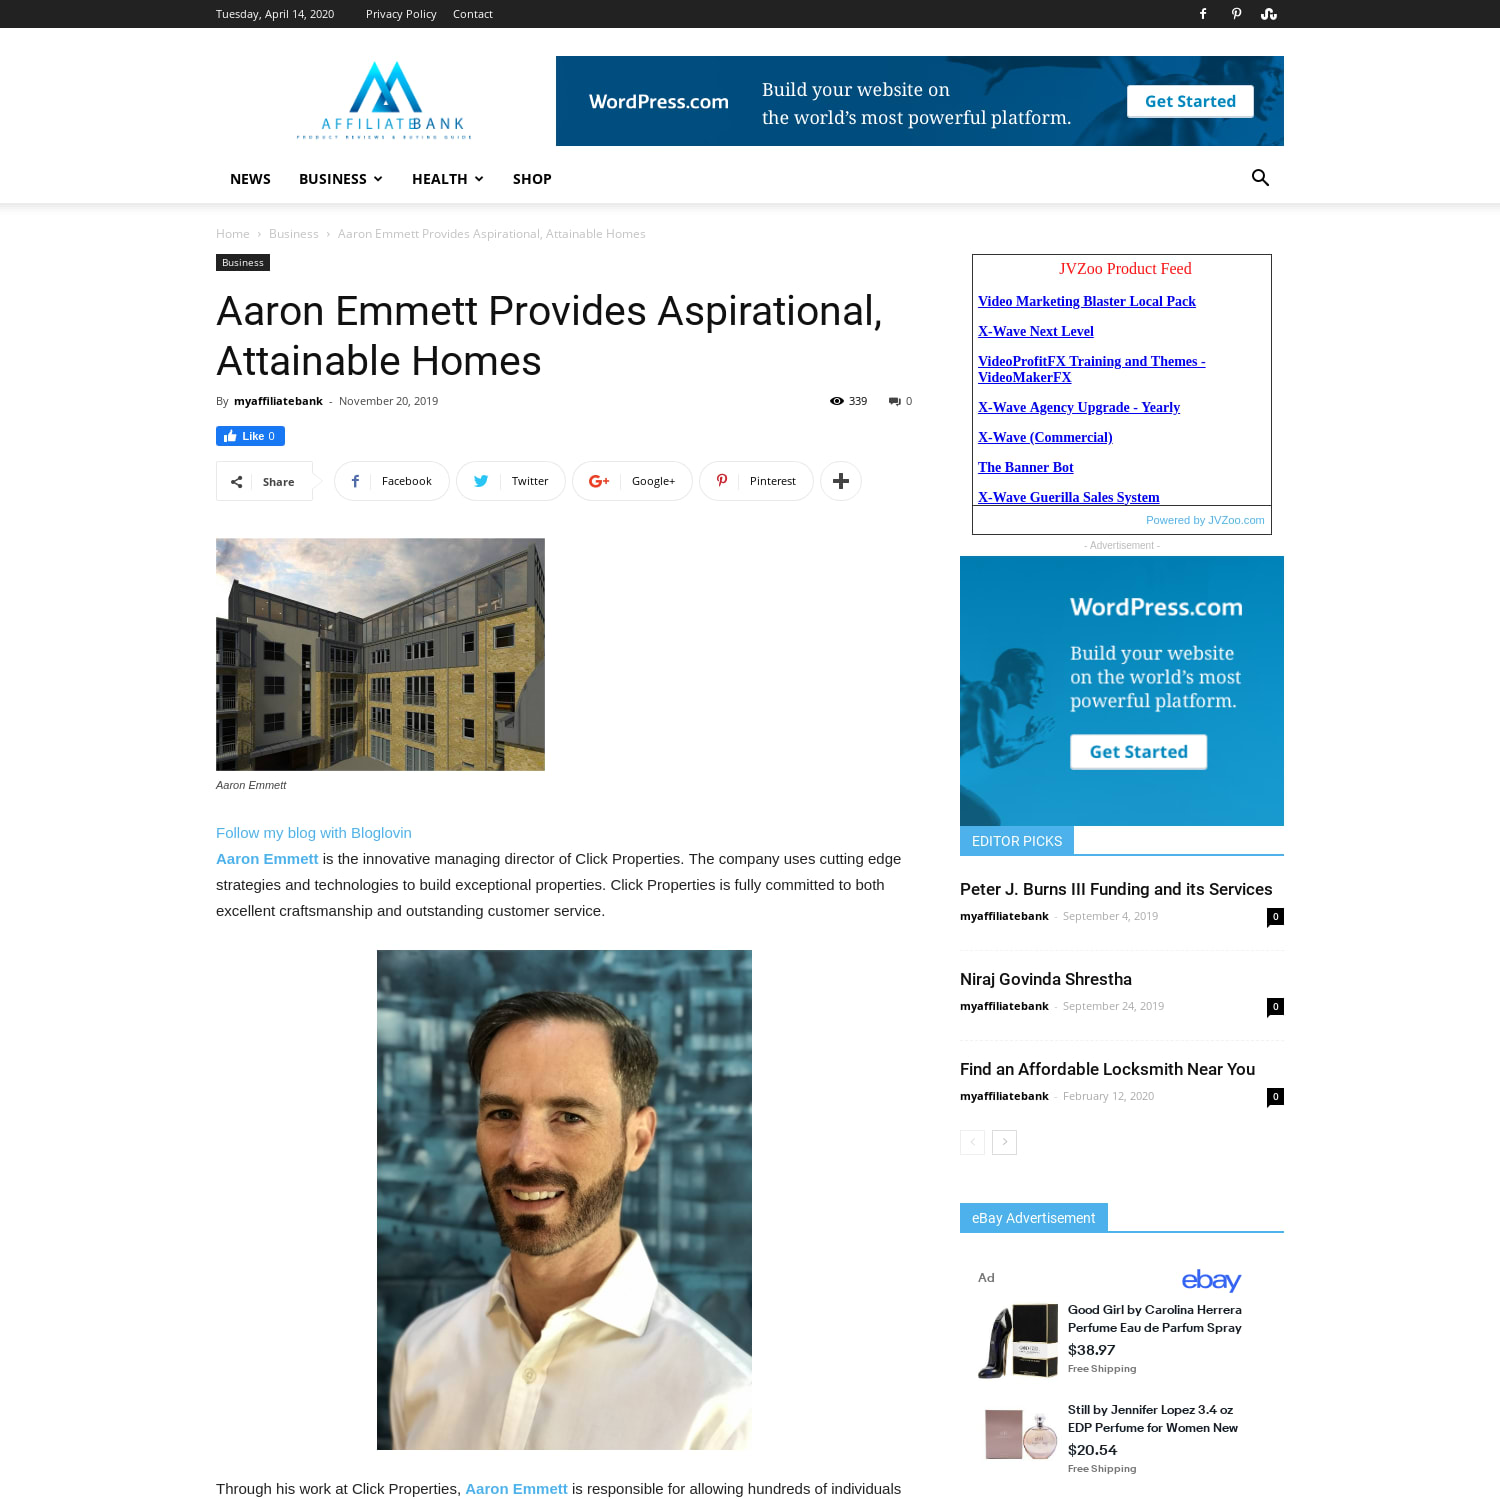 Aaron Emmett Provides Aspirational, Attainable Homes - Business & Health News